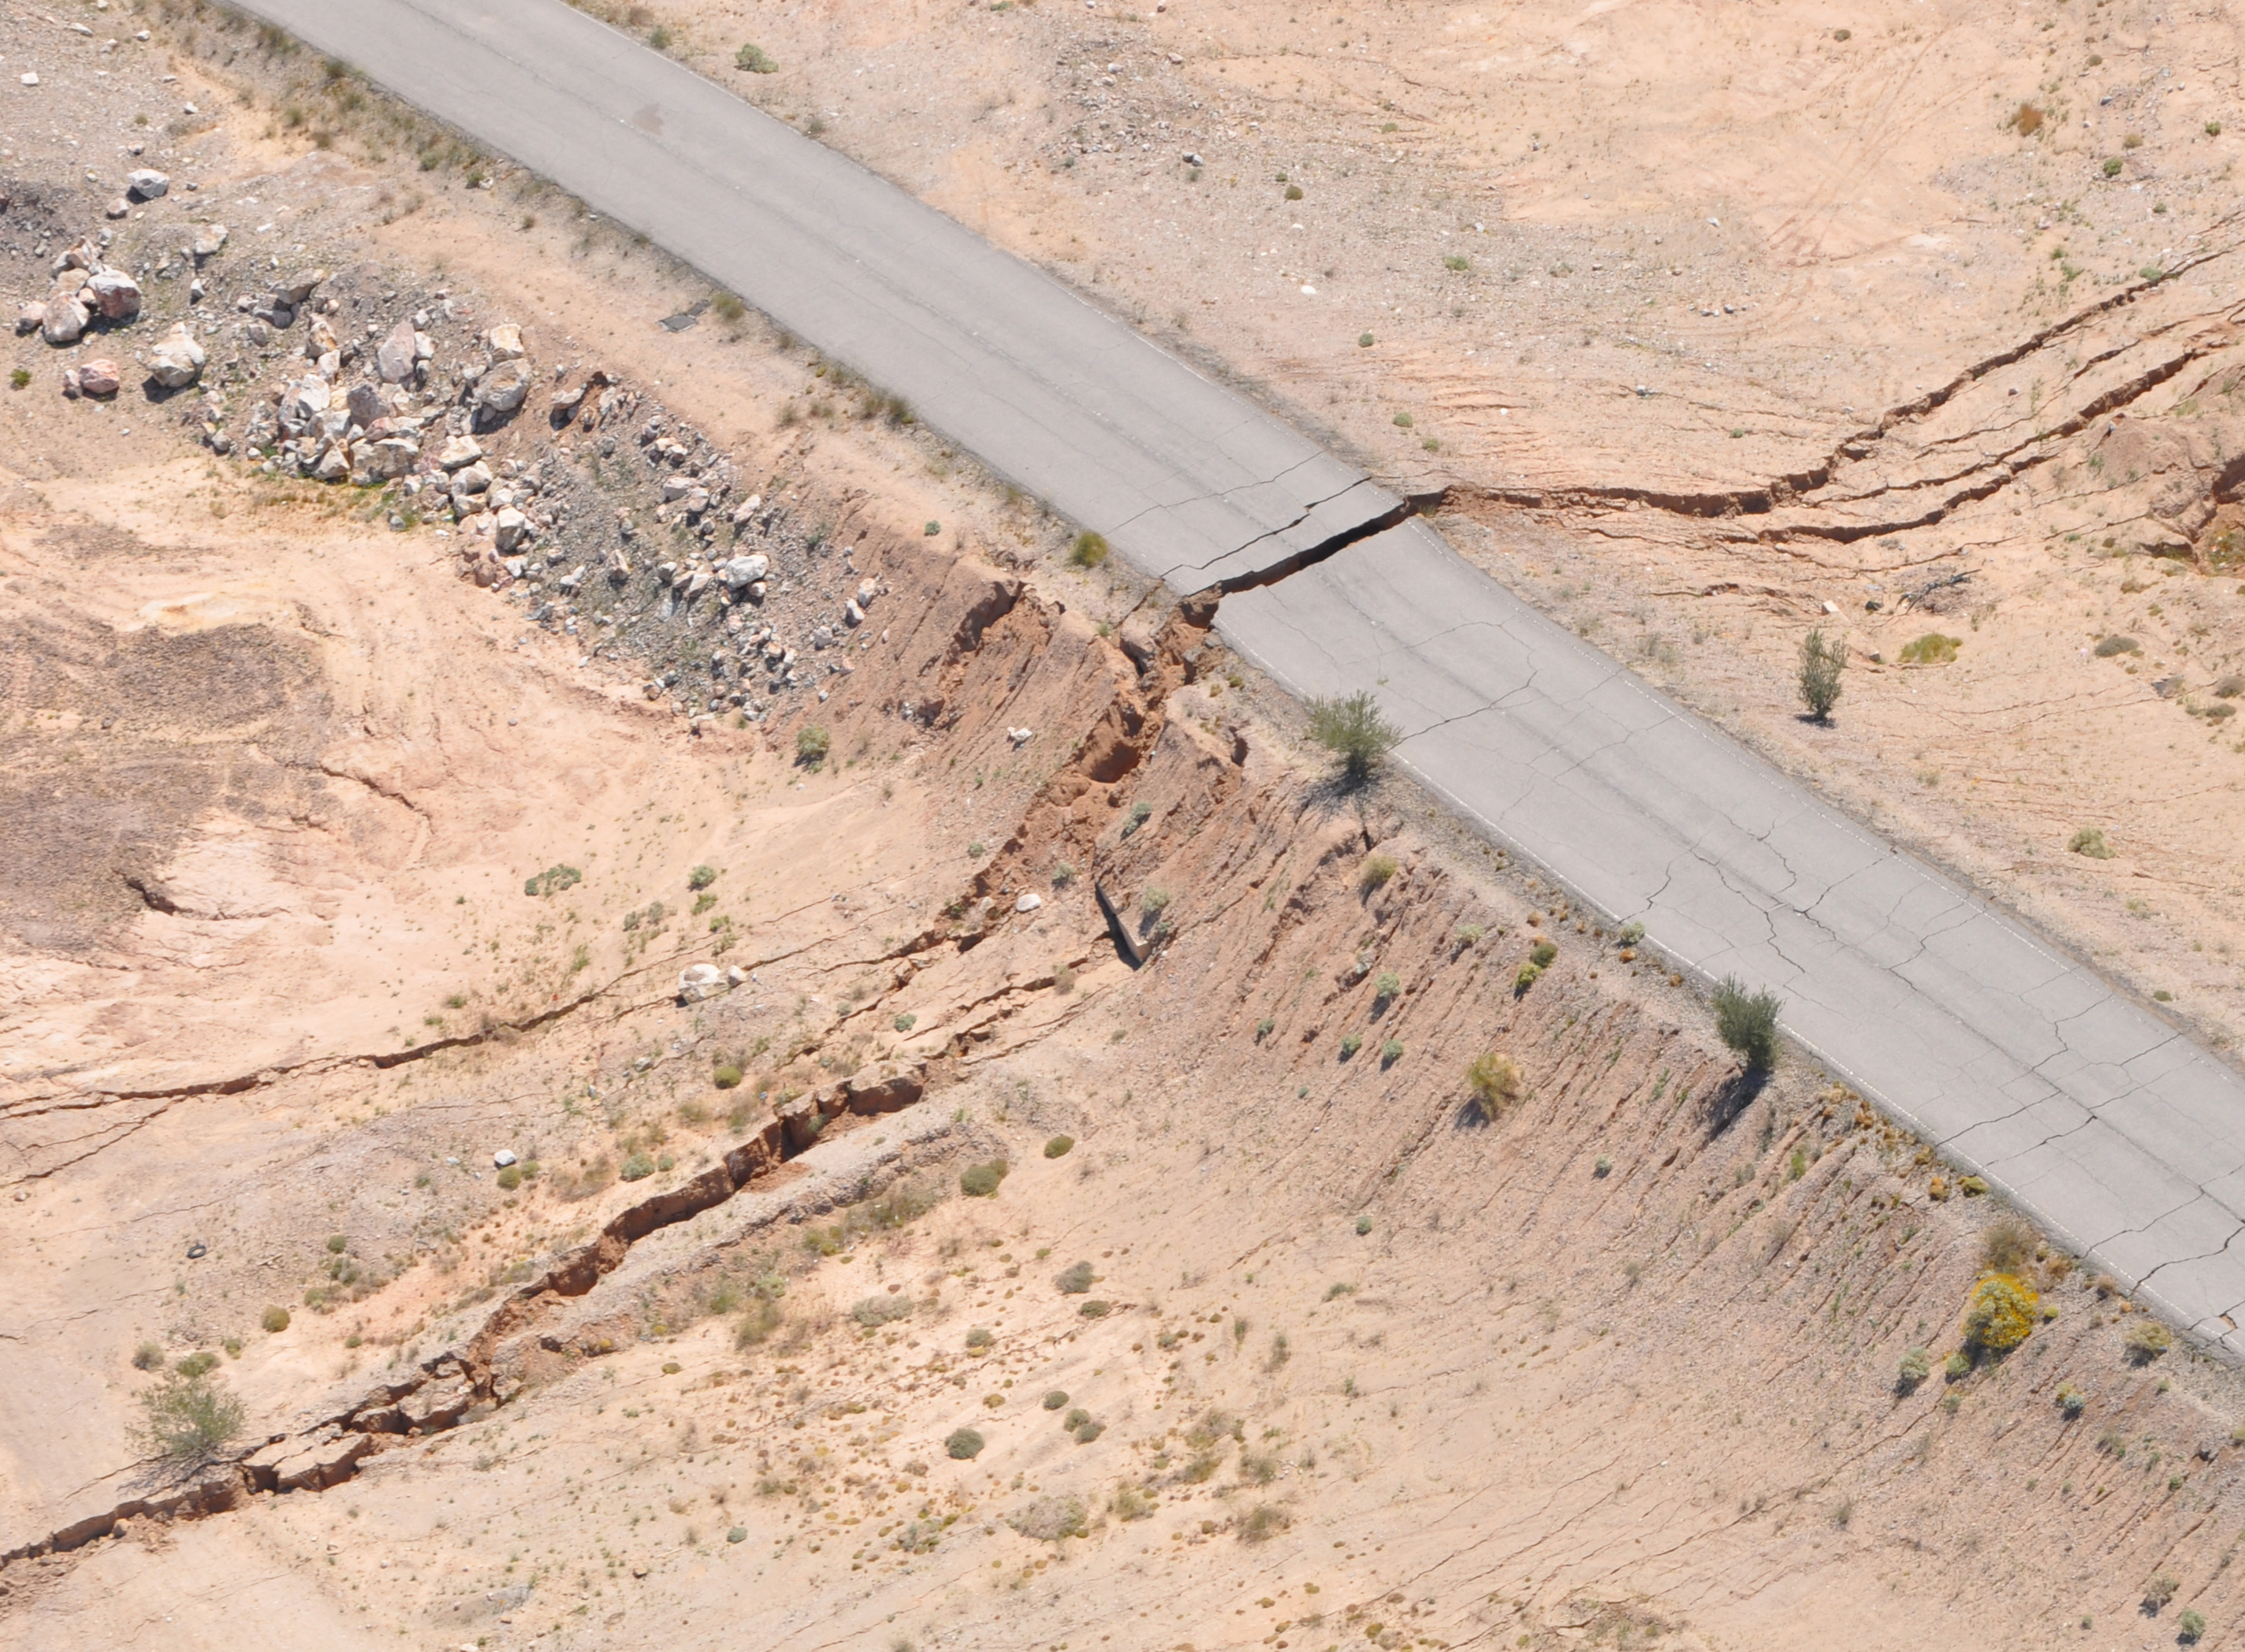 The El Mayor-Cucapah earthquake rupture across a road